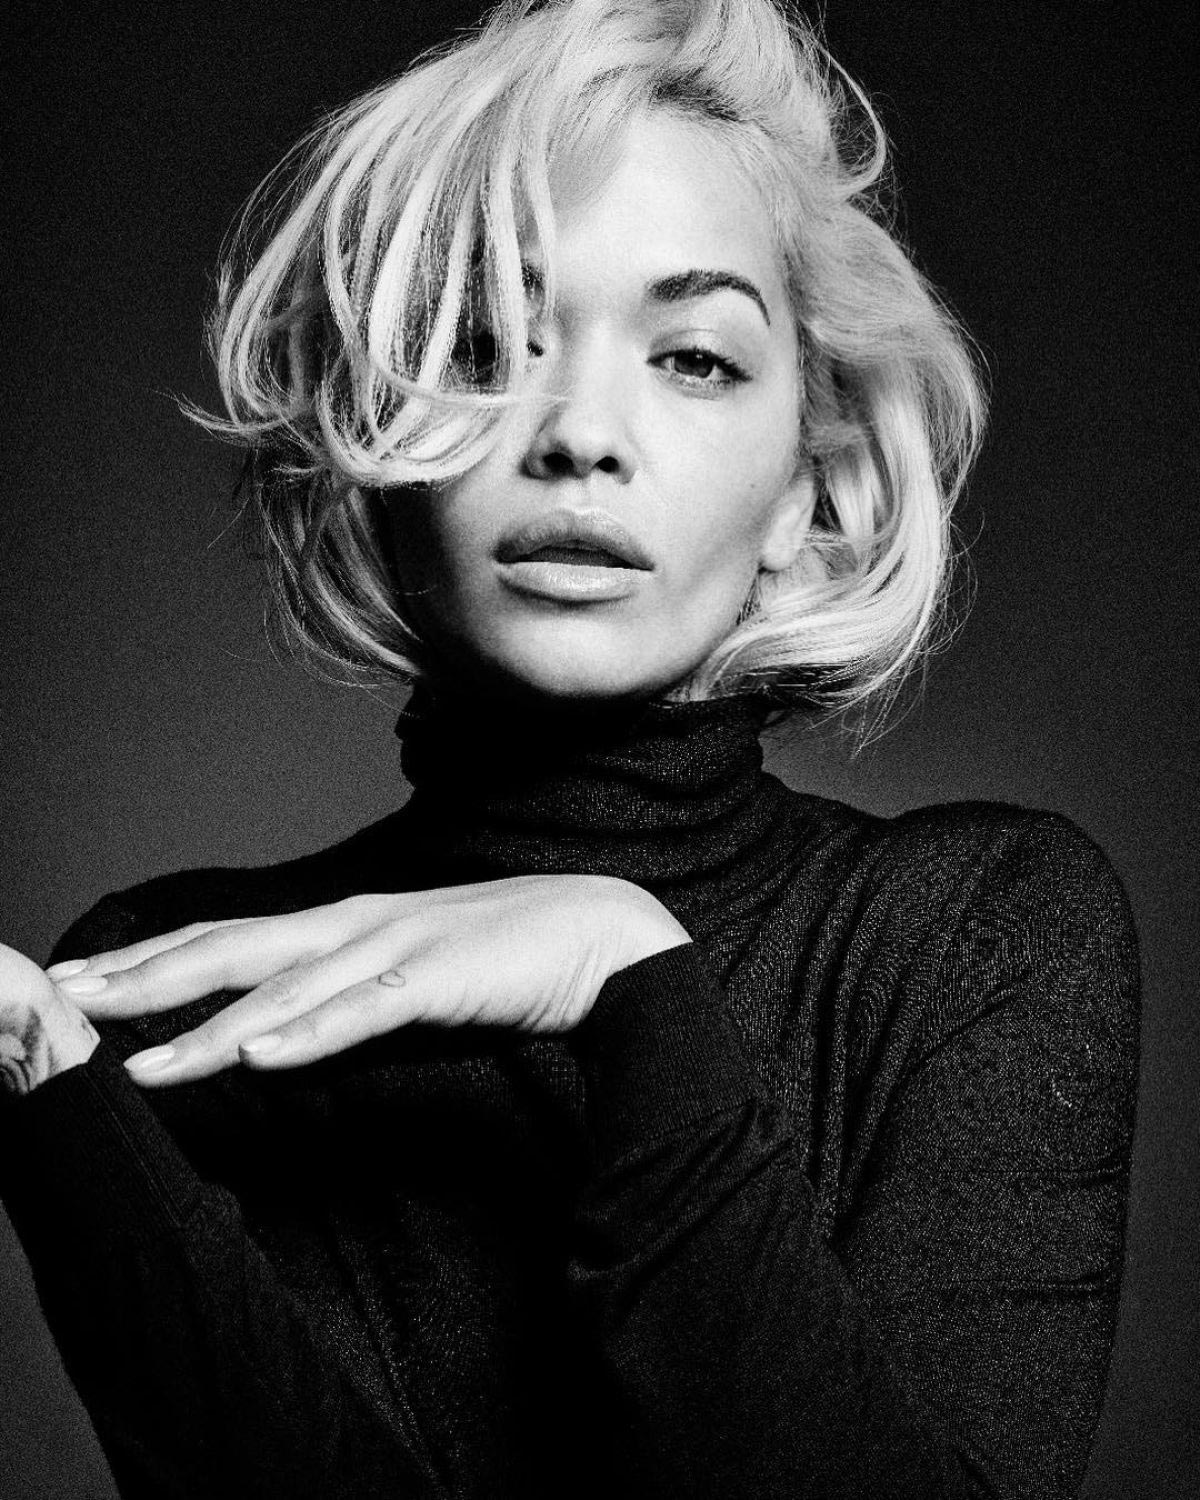 Rita Ora for Stylist Magazine Photoshoot 2018